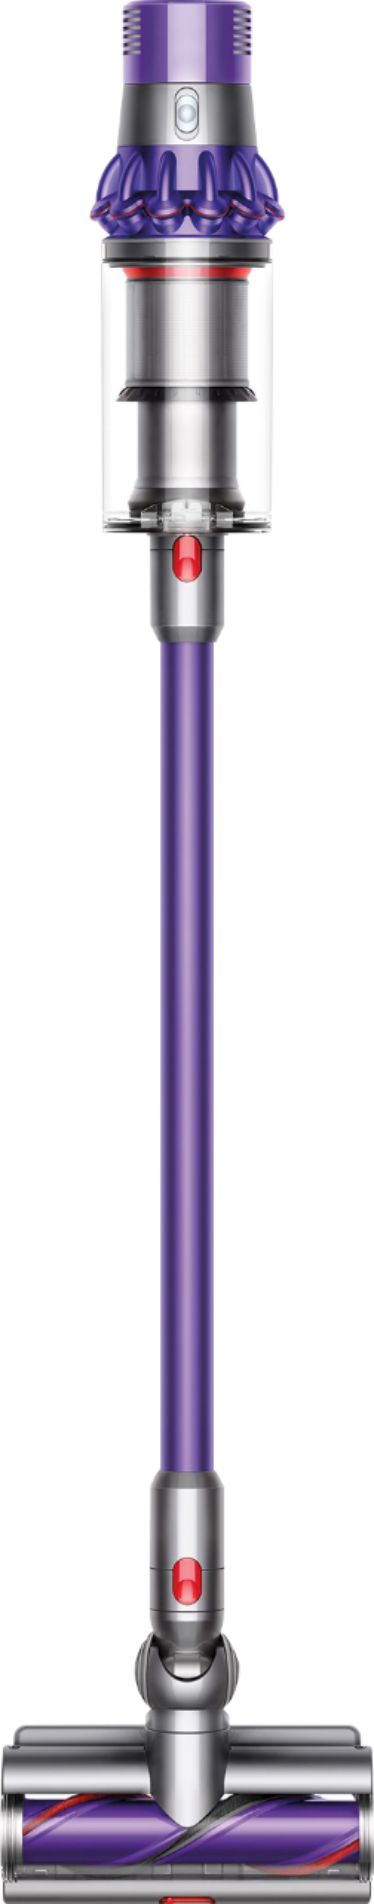 Best Buy: Dyson Cyclone V10 Animal Cord-Free Stick Vacuum Purple 226319-01